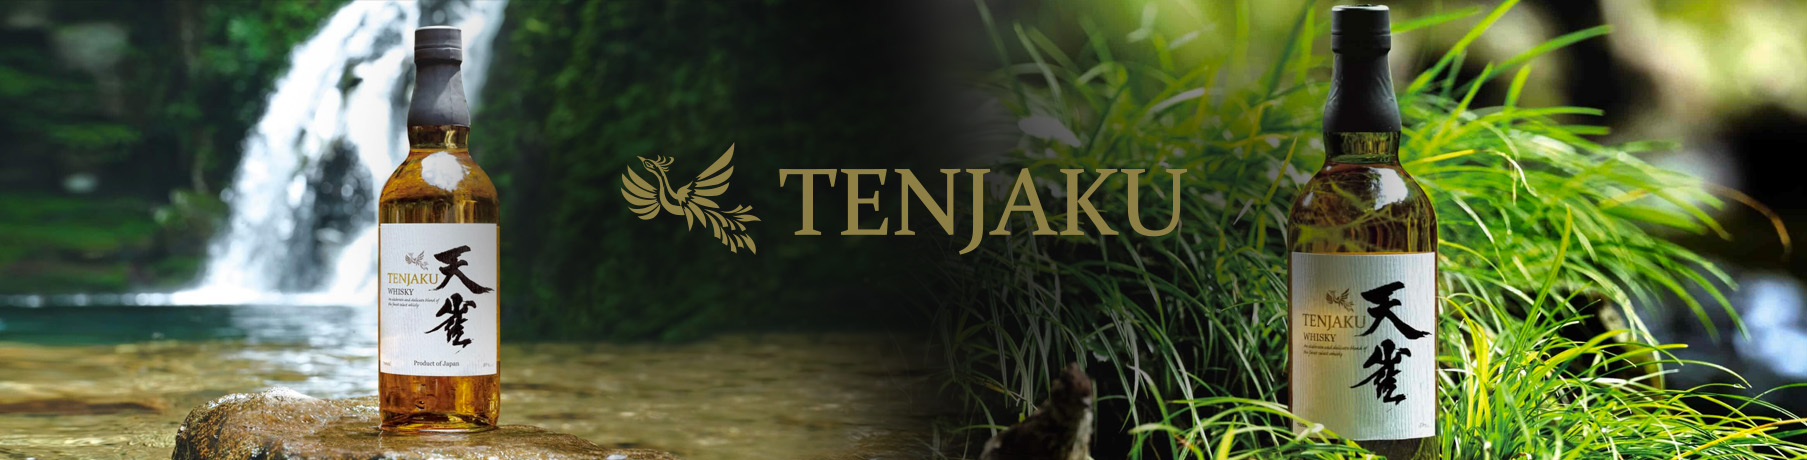 Tenjaku, harmonická whisky z Japonska